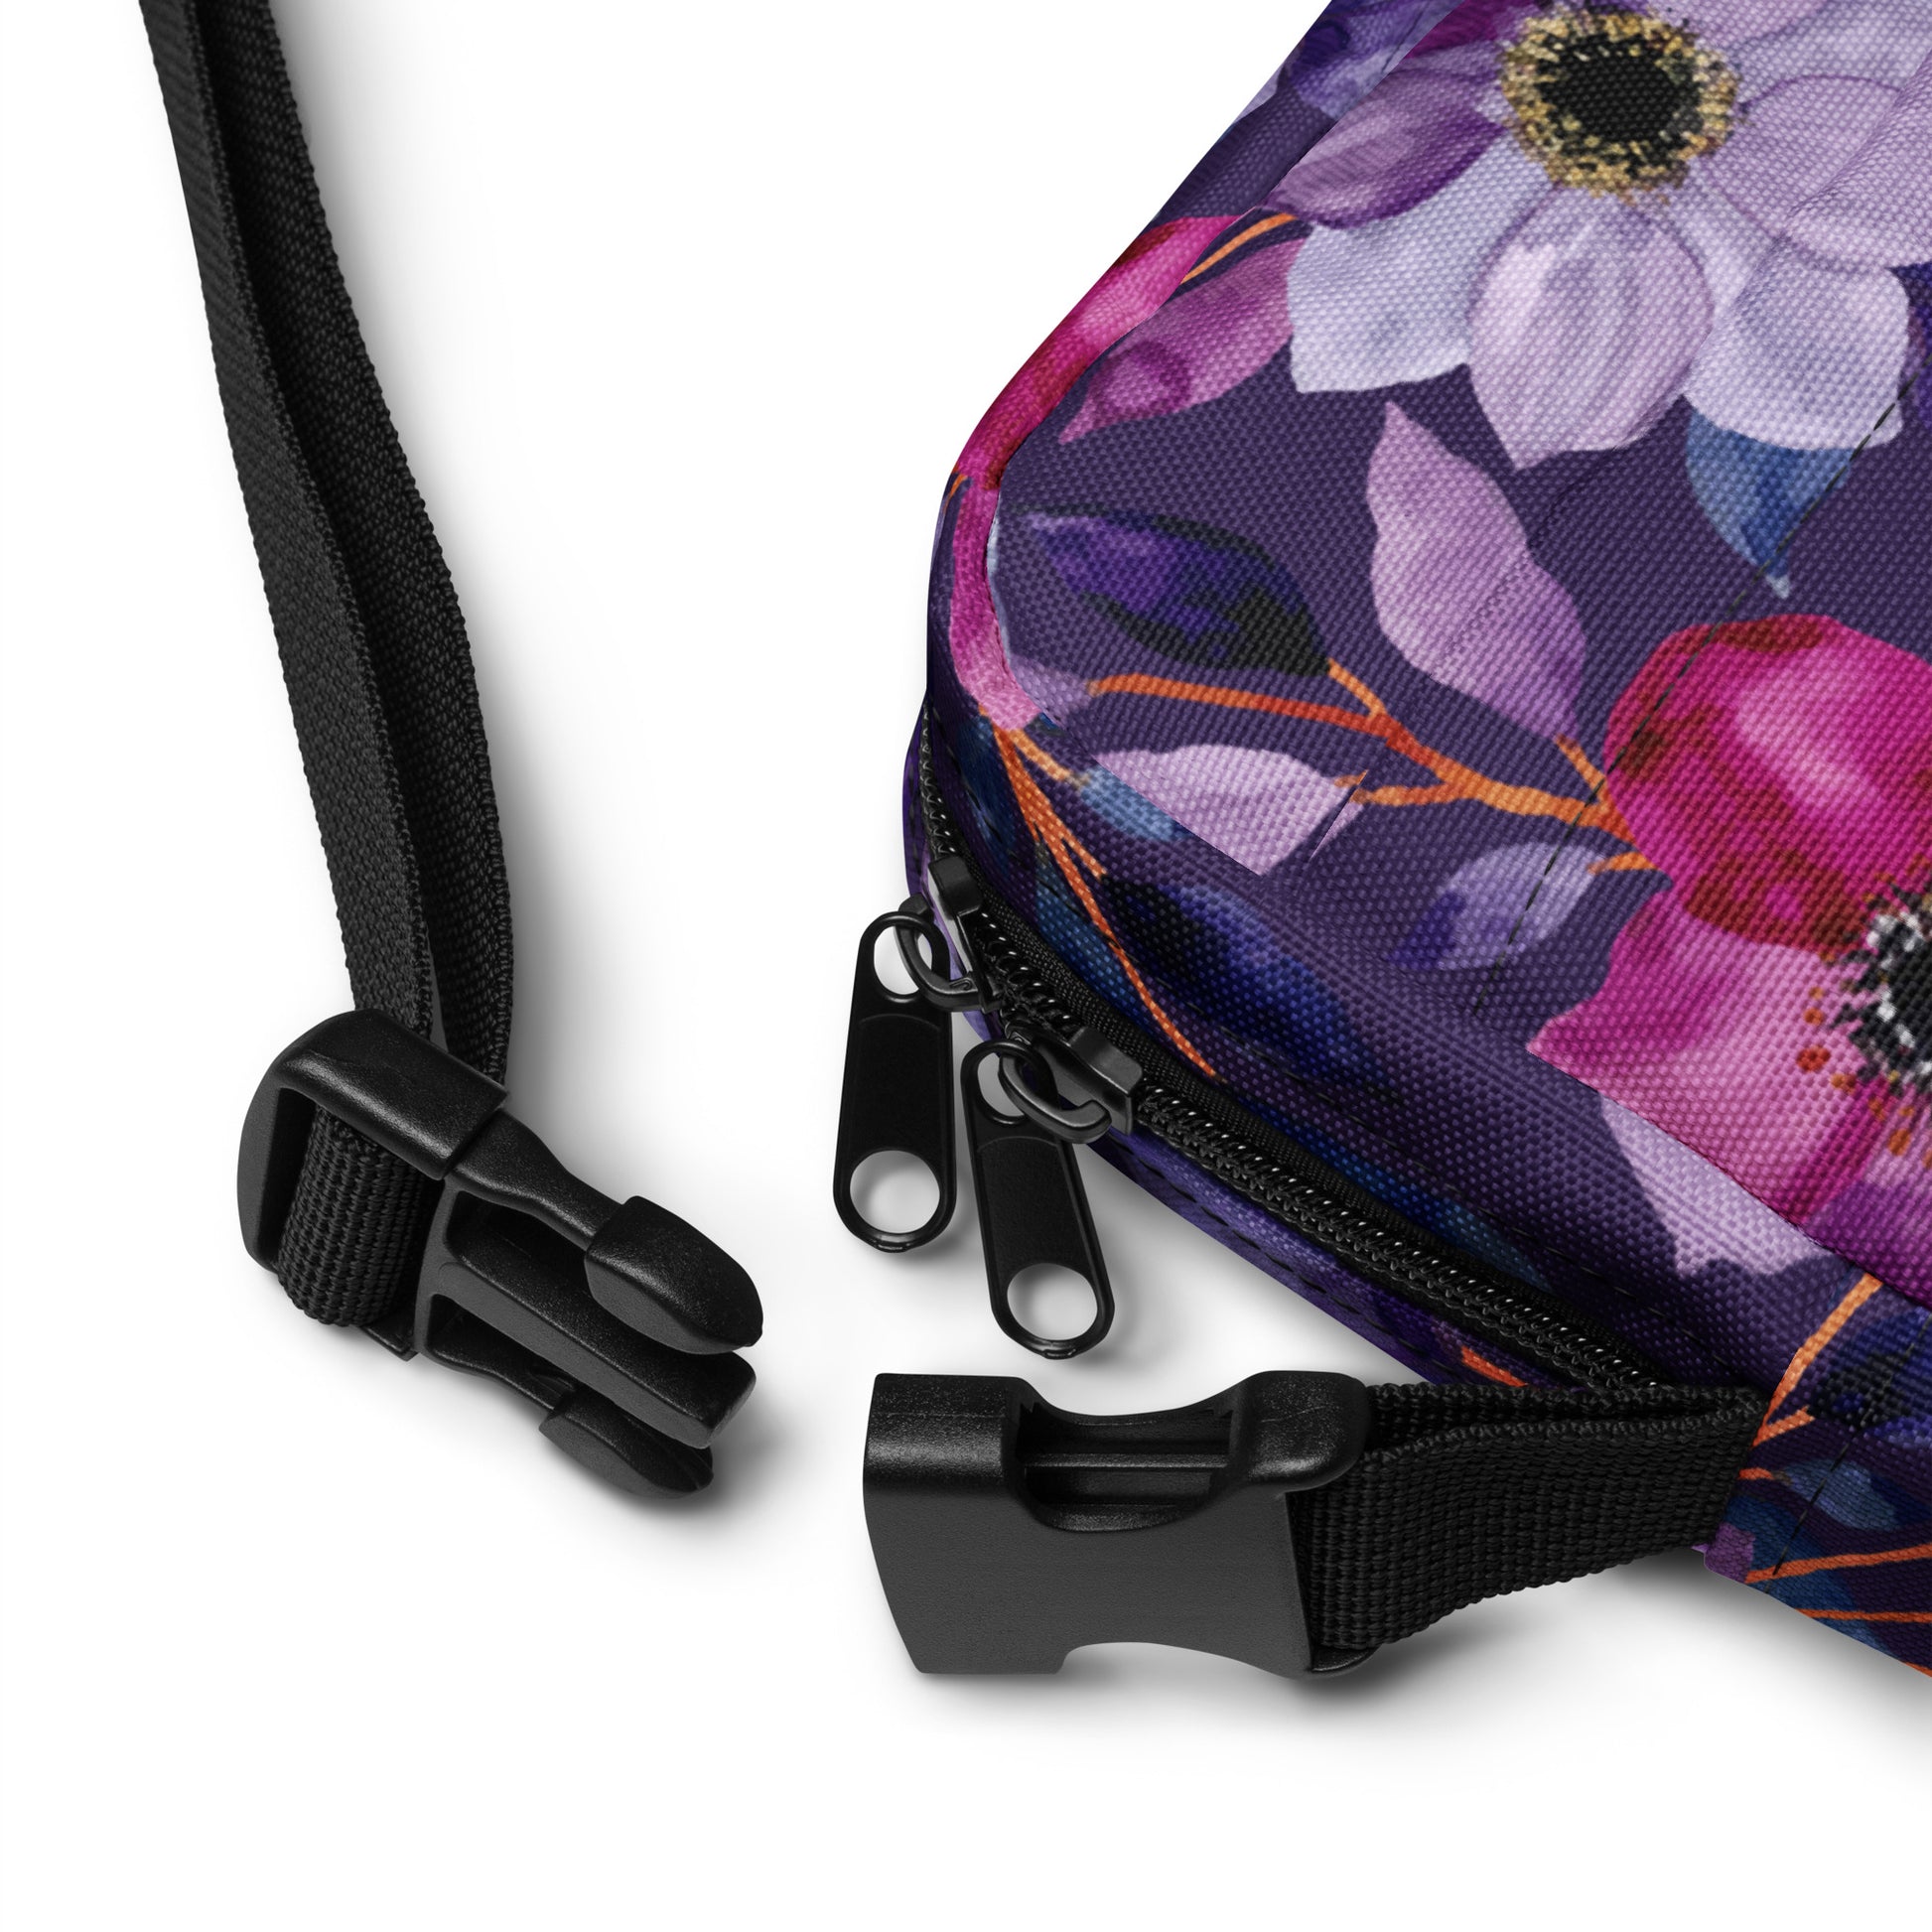 Purple Flowers - Utility crossbody bag Utility Cross Body Bag